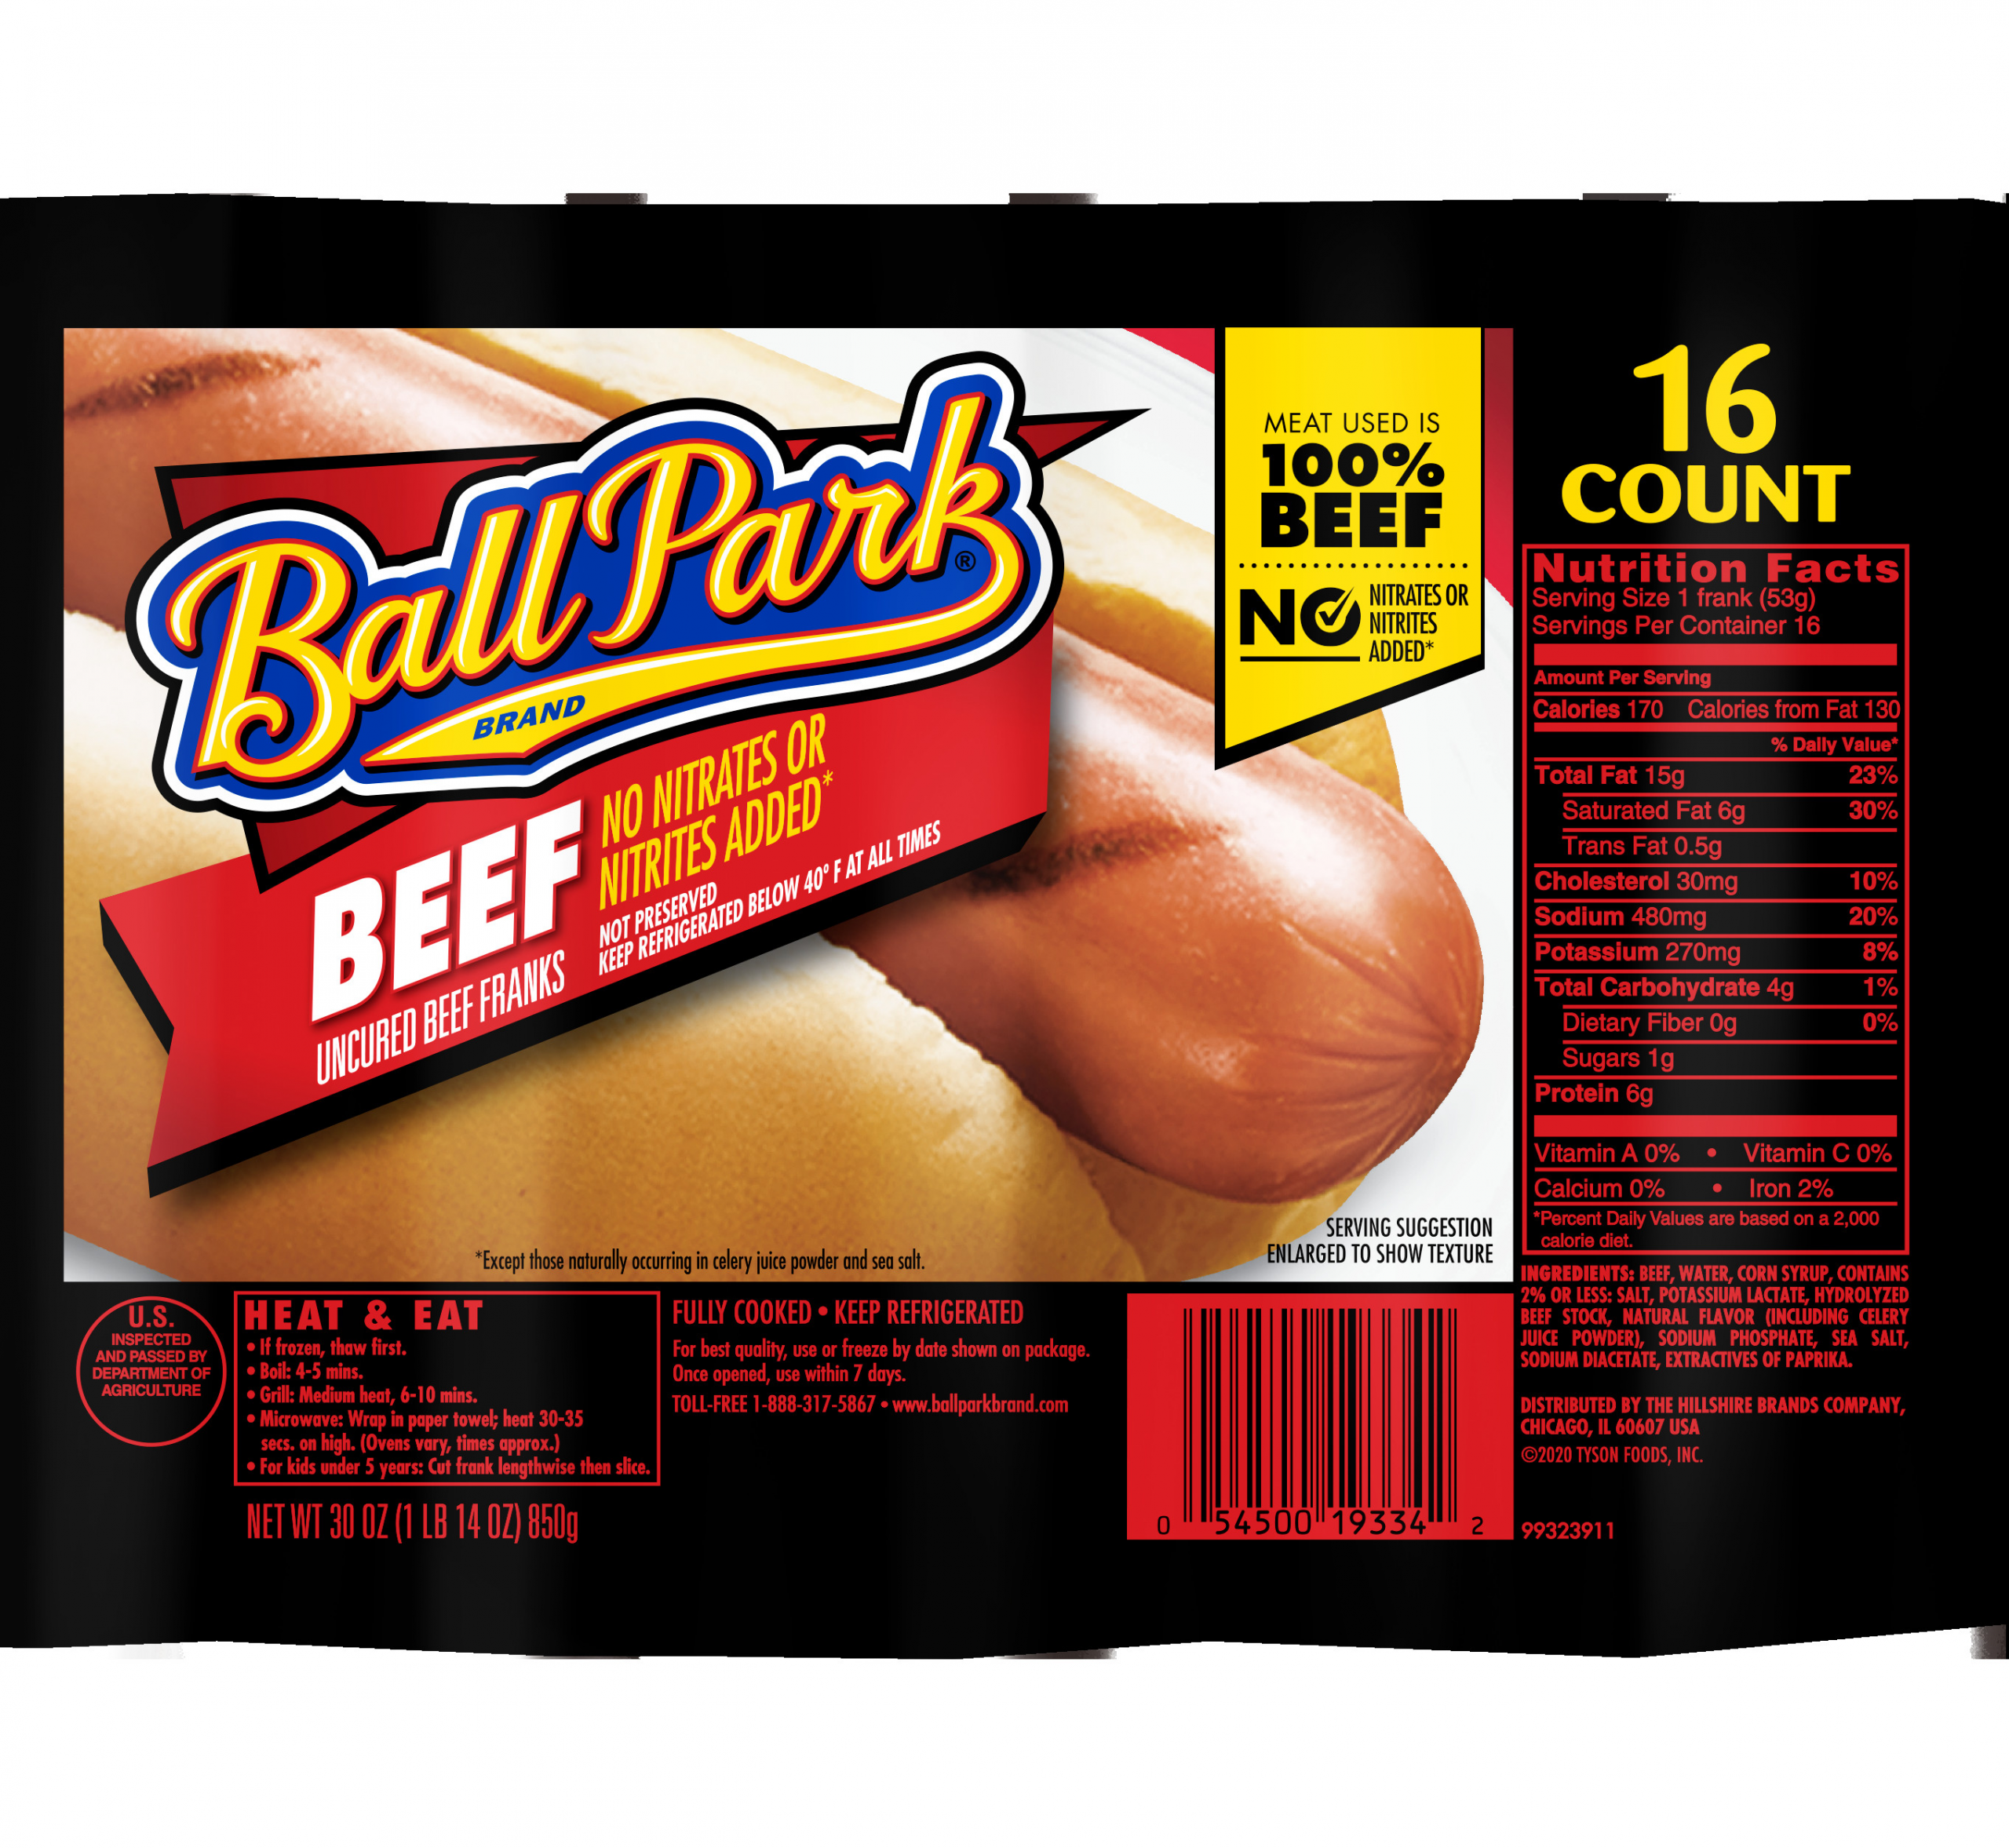 Ballpark Beef Hot Dogs Best Of Ball Park Beef Hot Dogs original Length 16 Count